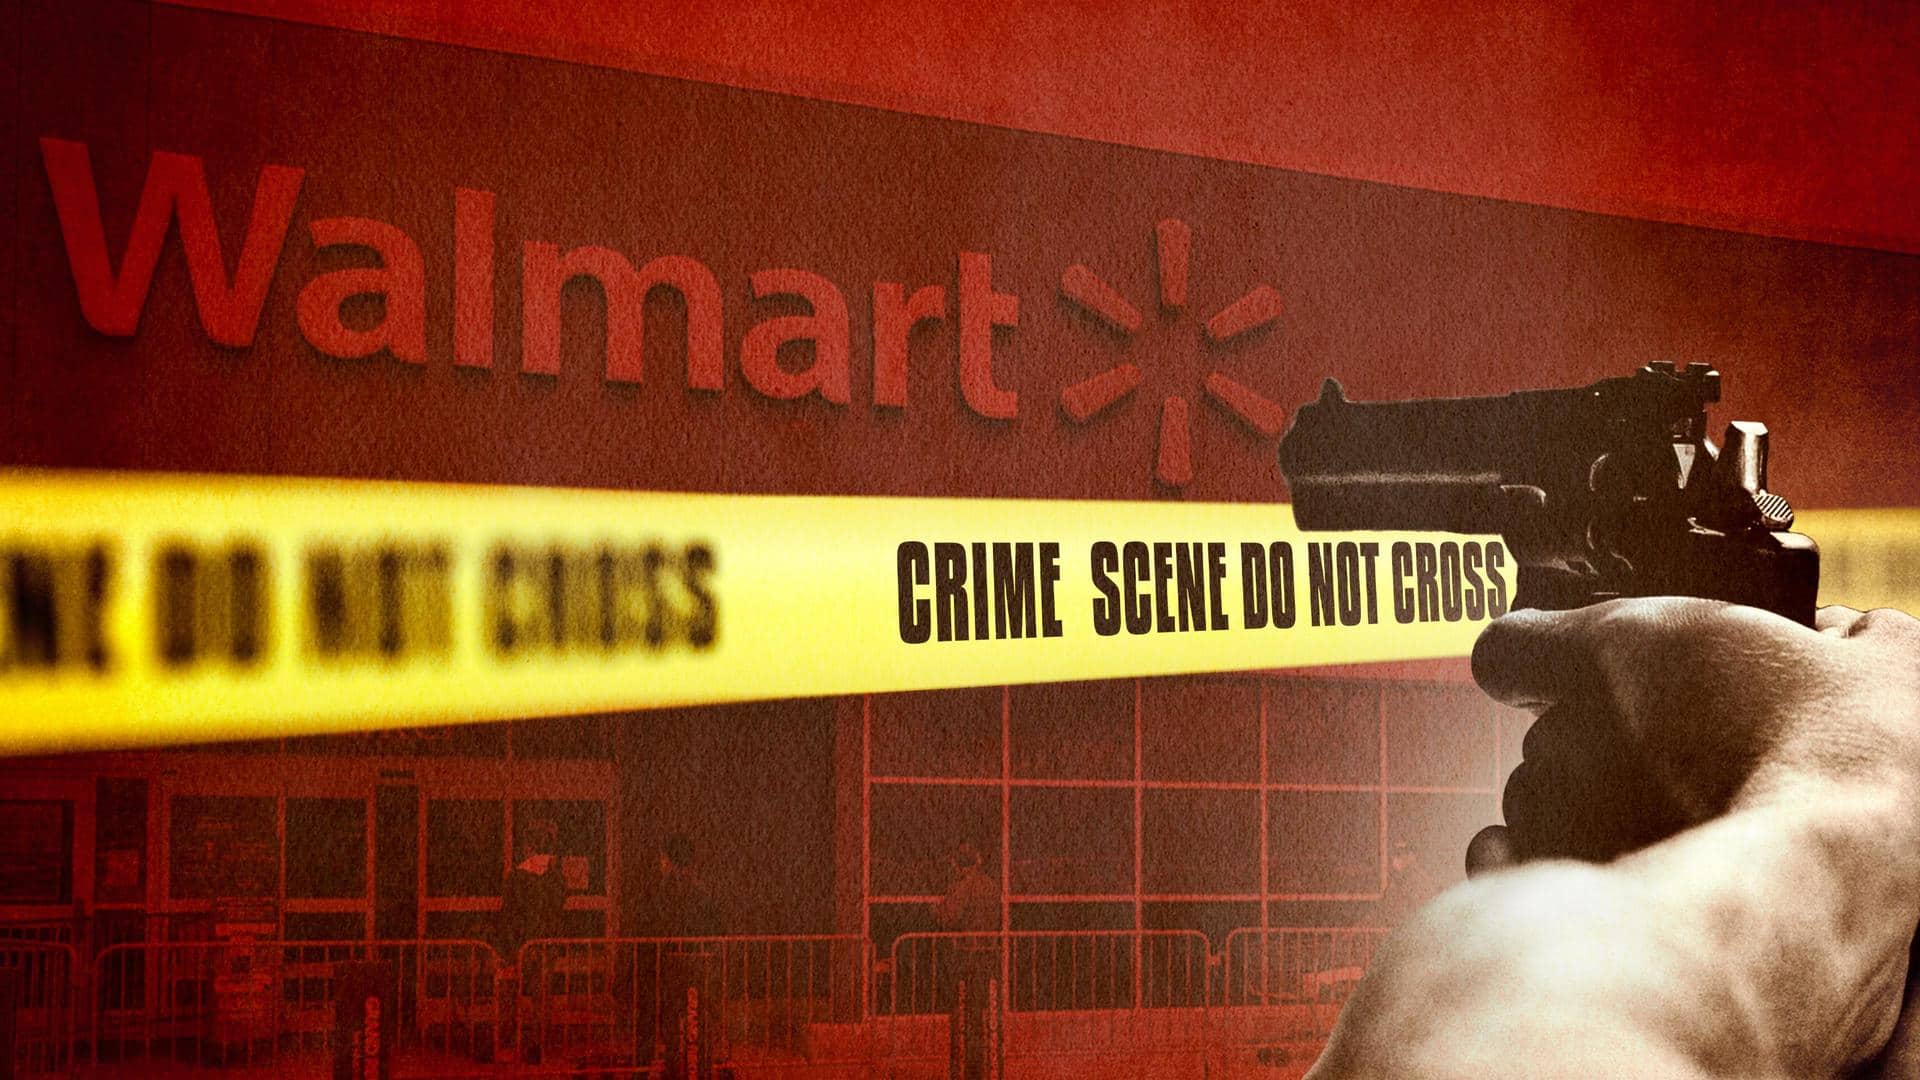 US: Shooting at Virginia Walmart store, up to 10 killed